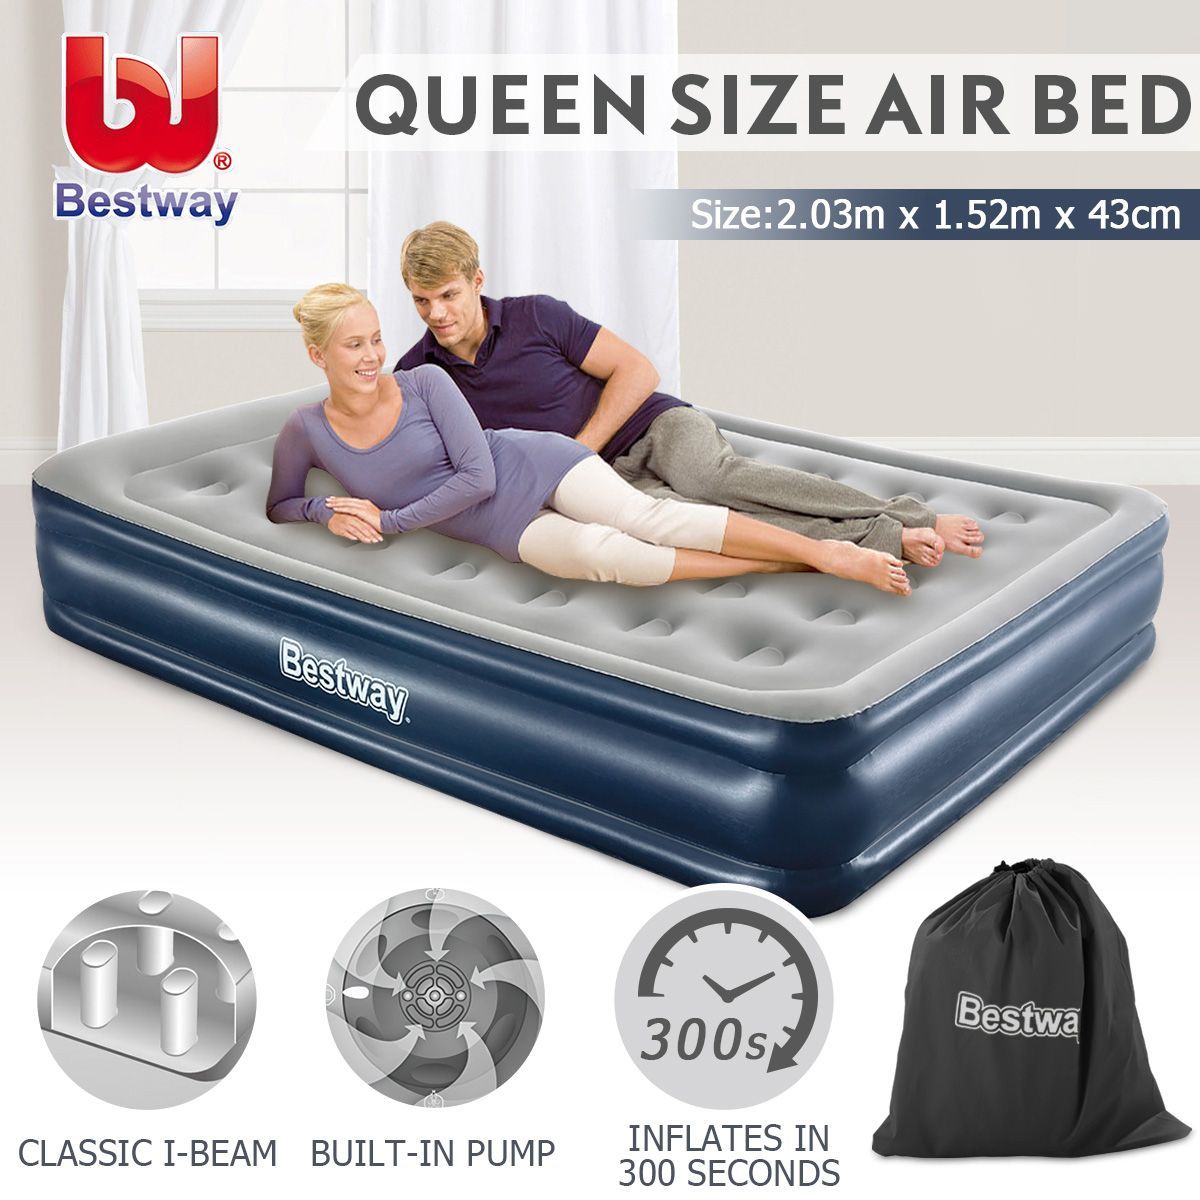 Bestway Queen Flocked Air Bed 43cm Inflatable Blow Up Mattress w/Built-in Pillow & Pump